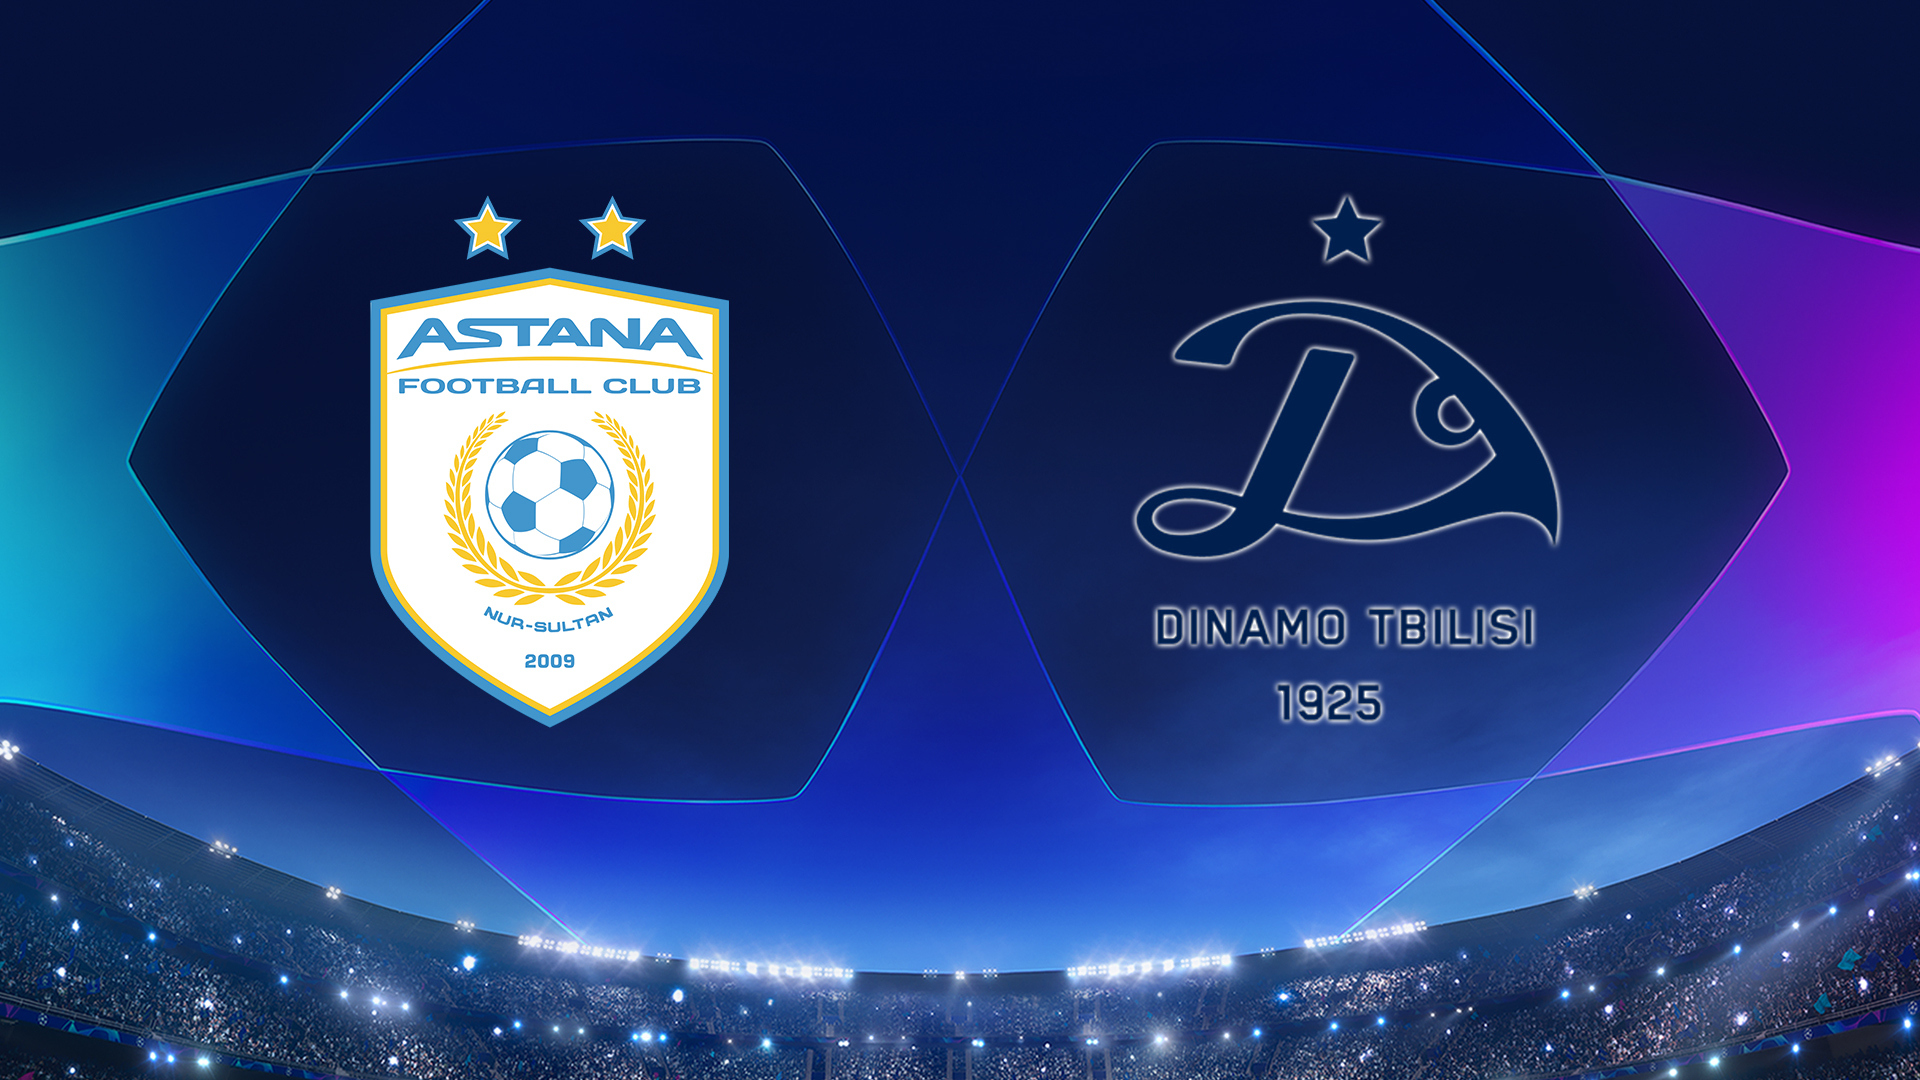 Football, CL Qualification, Dinamo Tbilisi 